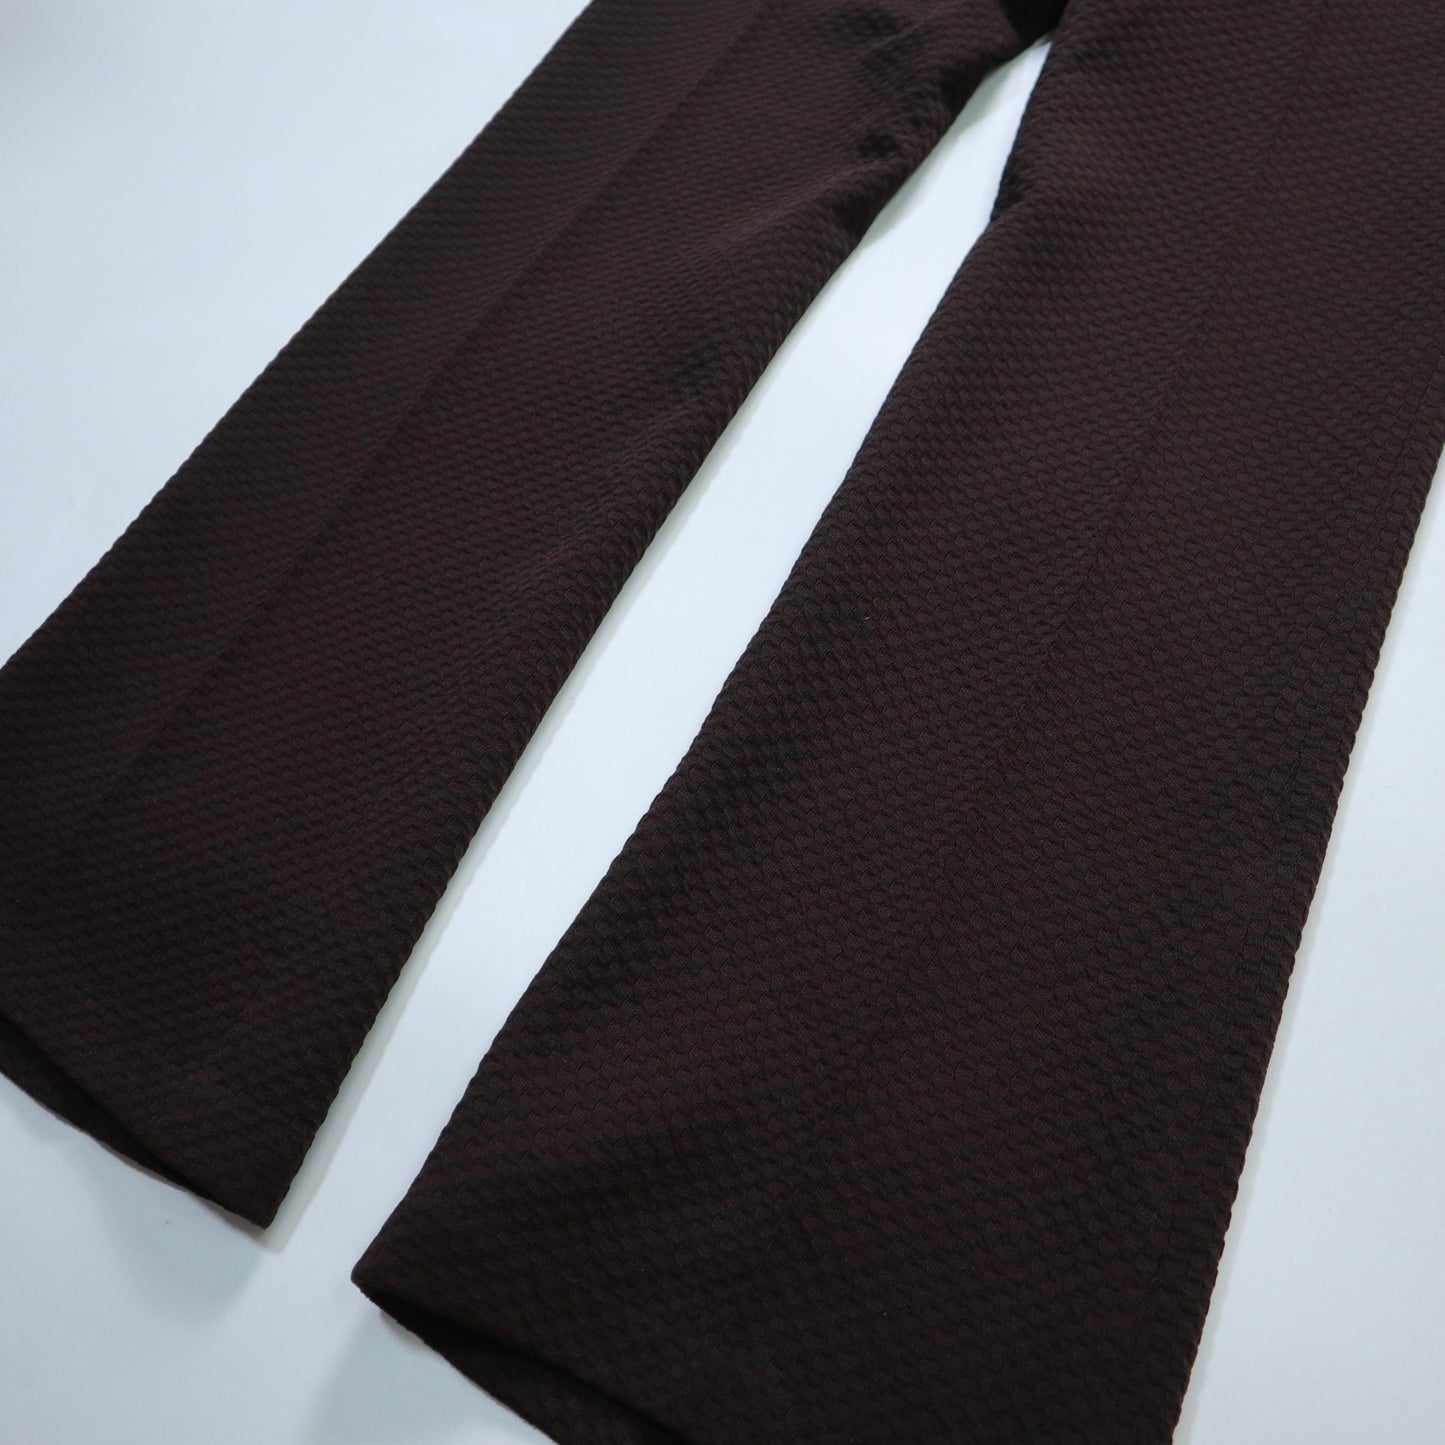 (31W) 70s LEE American-made dark brown three-dimensional textured bell-bottom pants Talon zipper